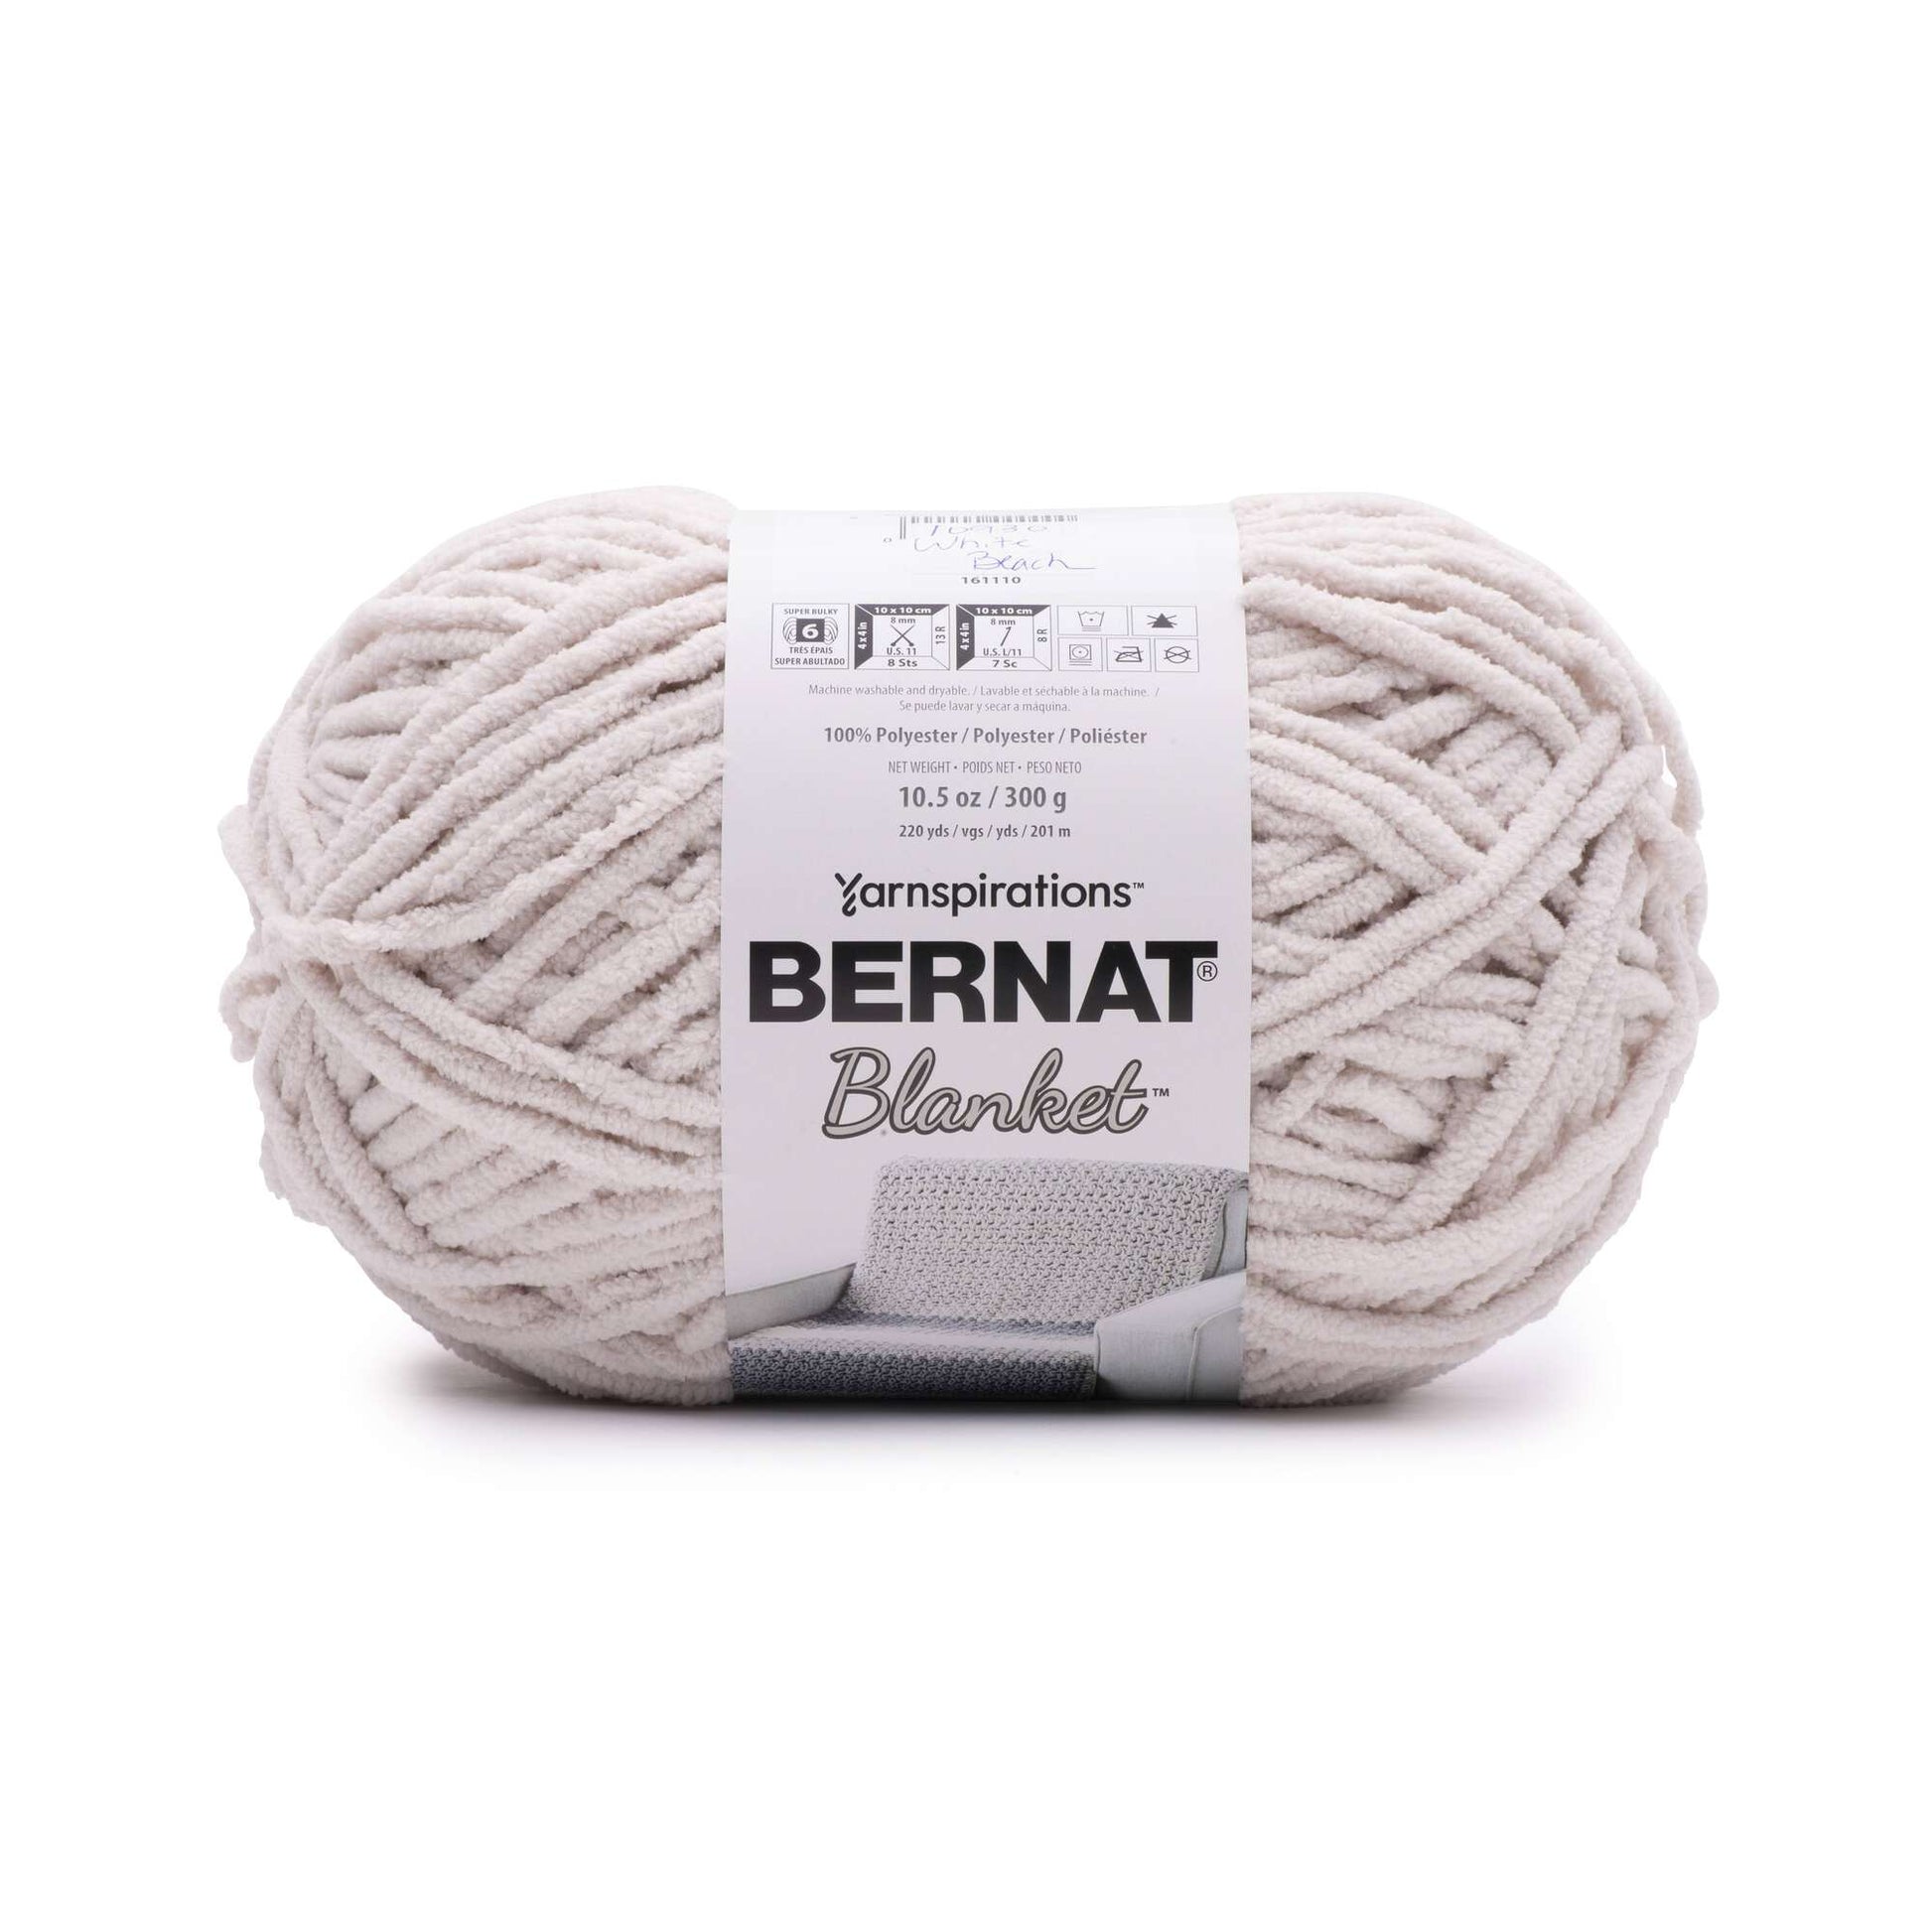 Bernat Blanket Yarn (300g/10.5oz) White Beach